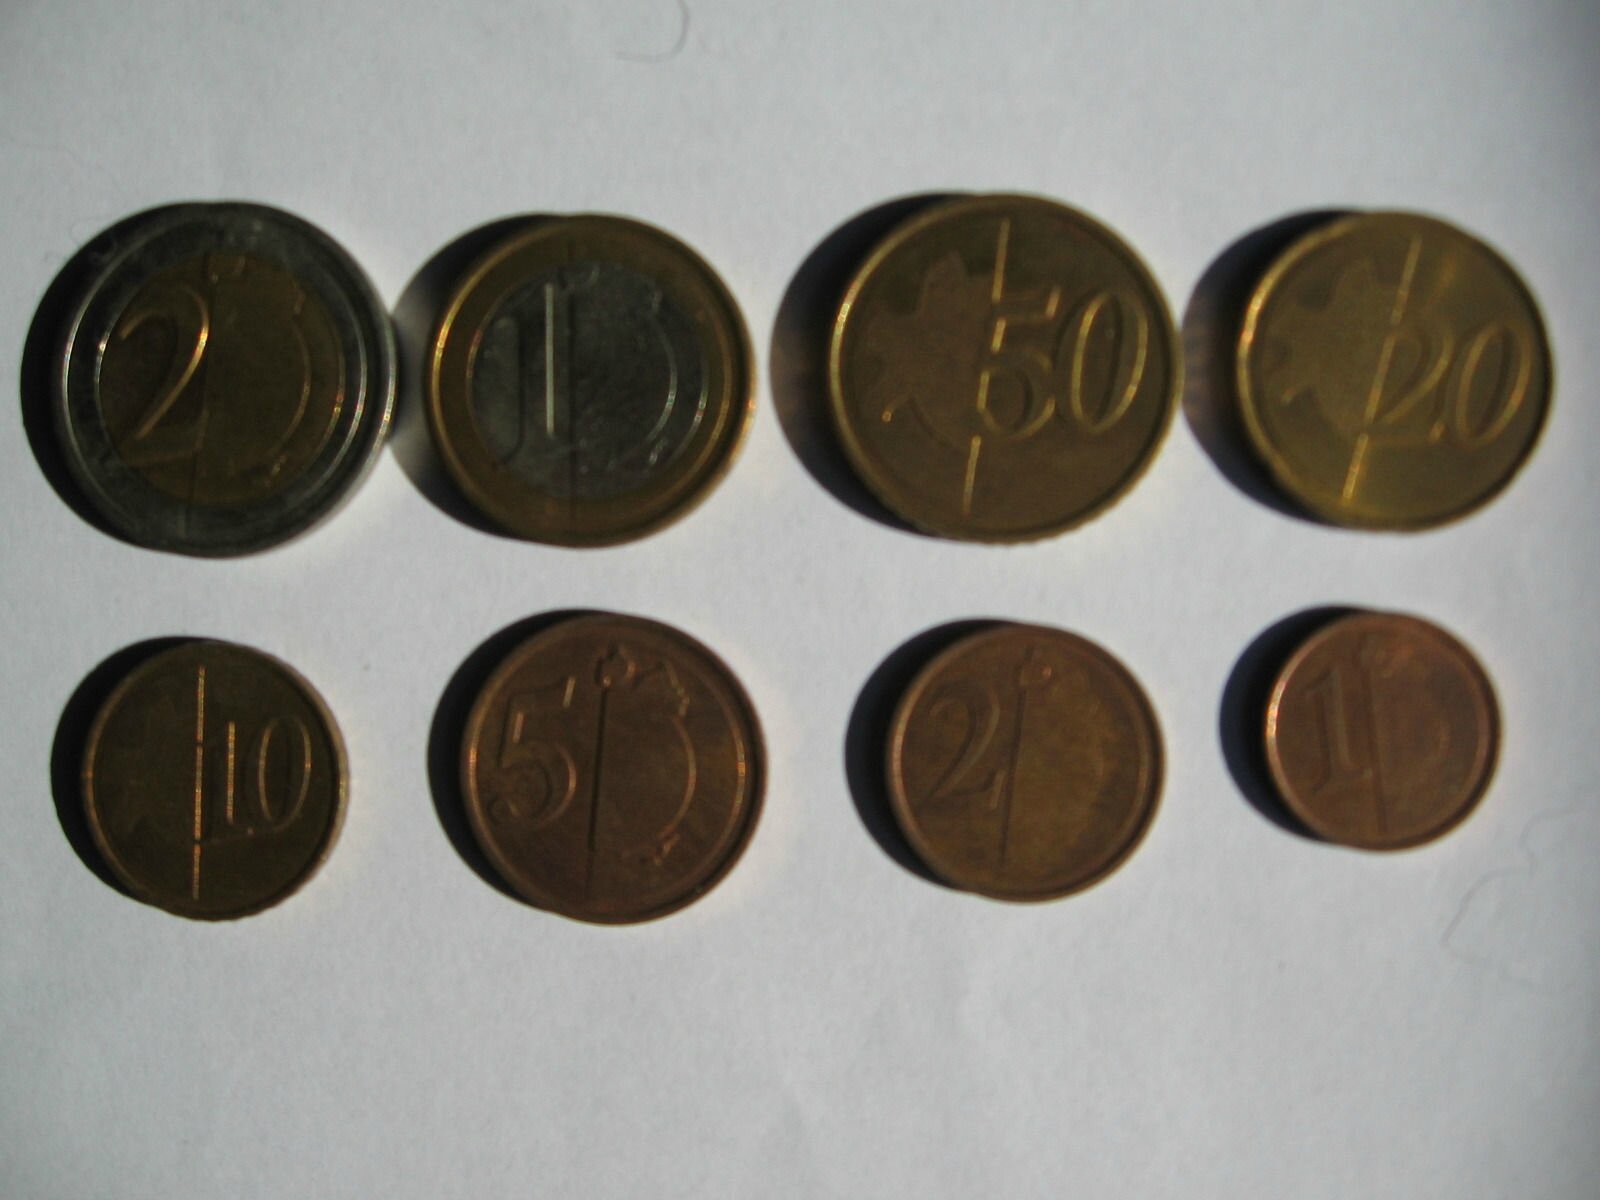 Trouilloteuse vendue 20€ - Eurorare monnaies fautées ou euro rare